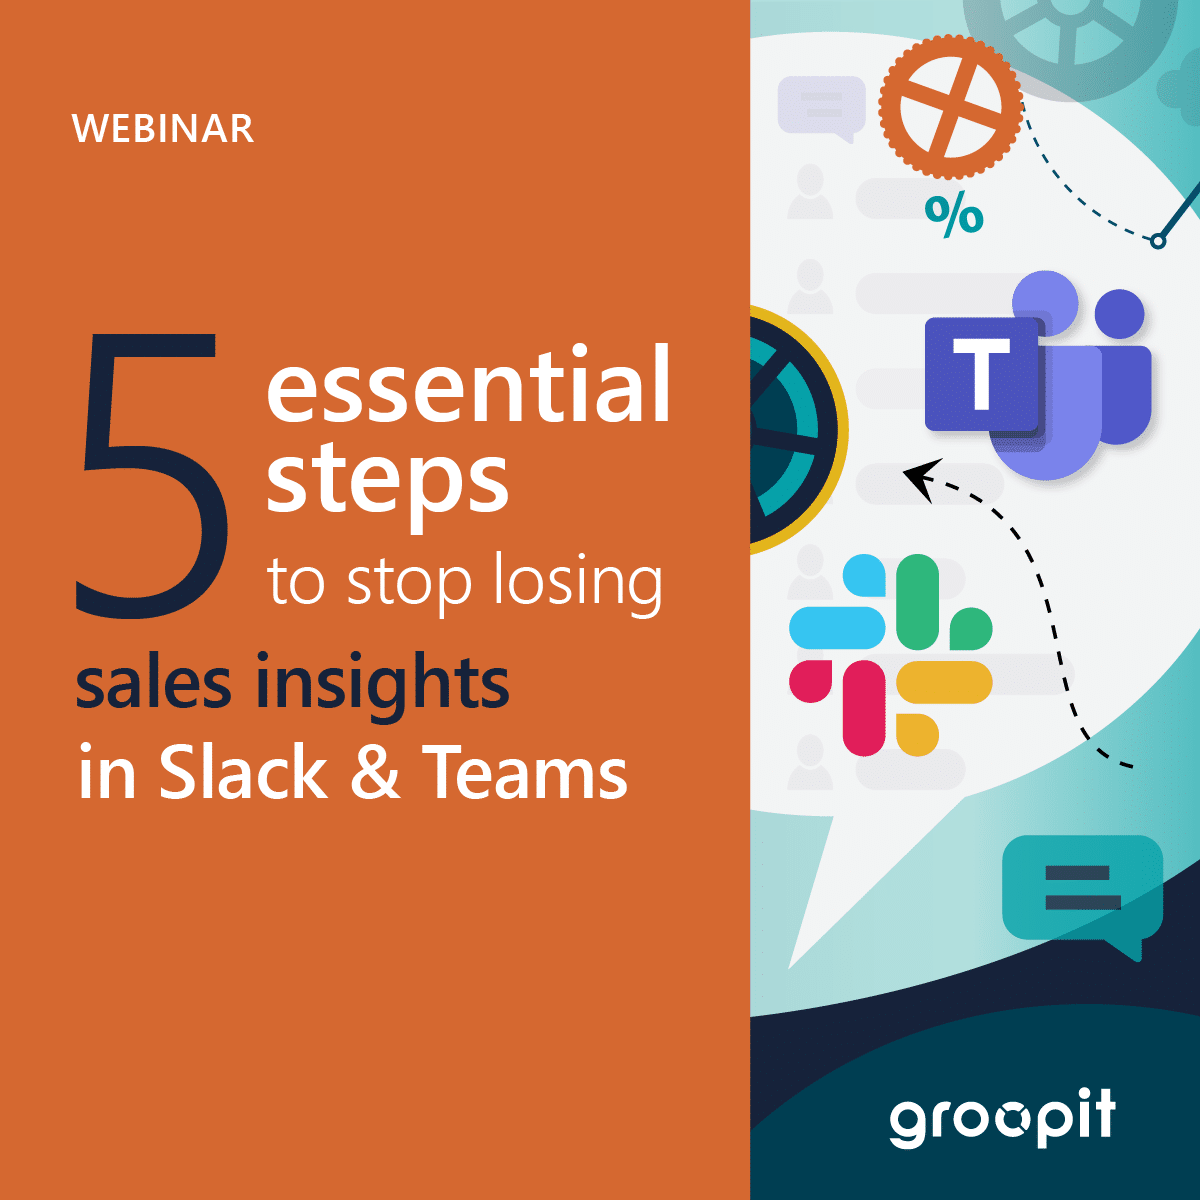 5 essential steps to stop losing sales insights in Slack & Teams